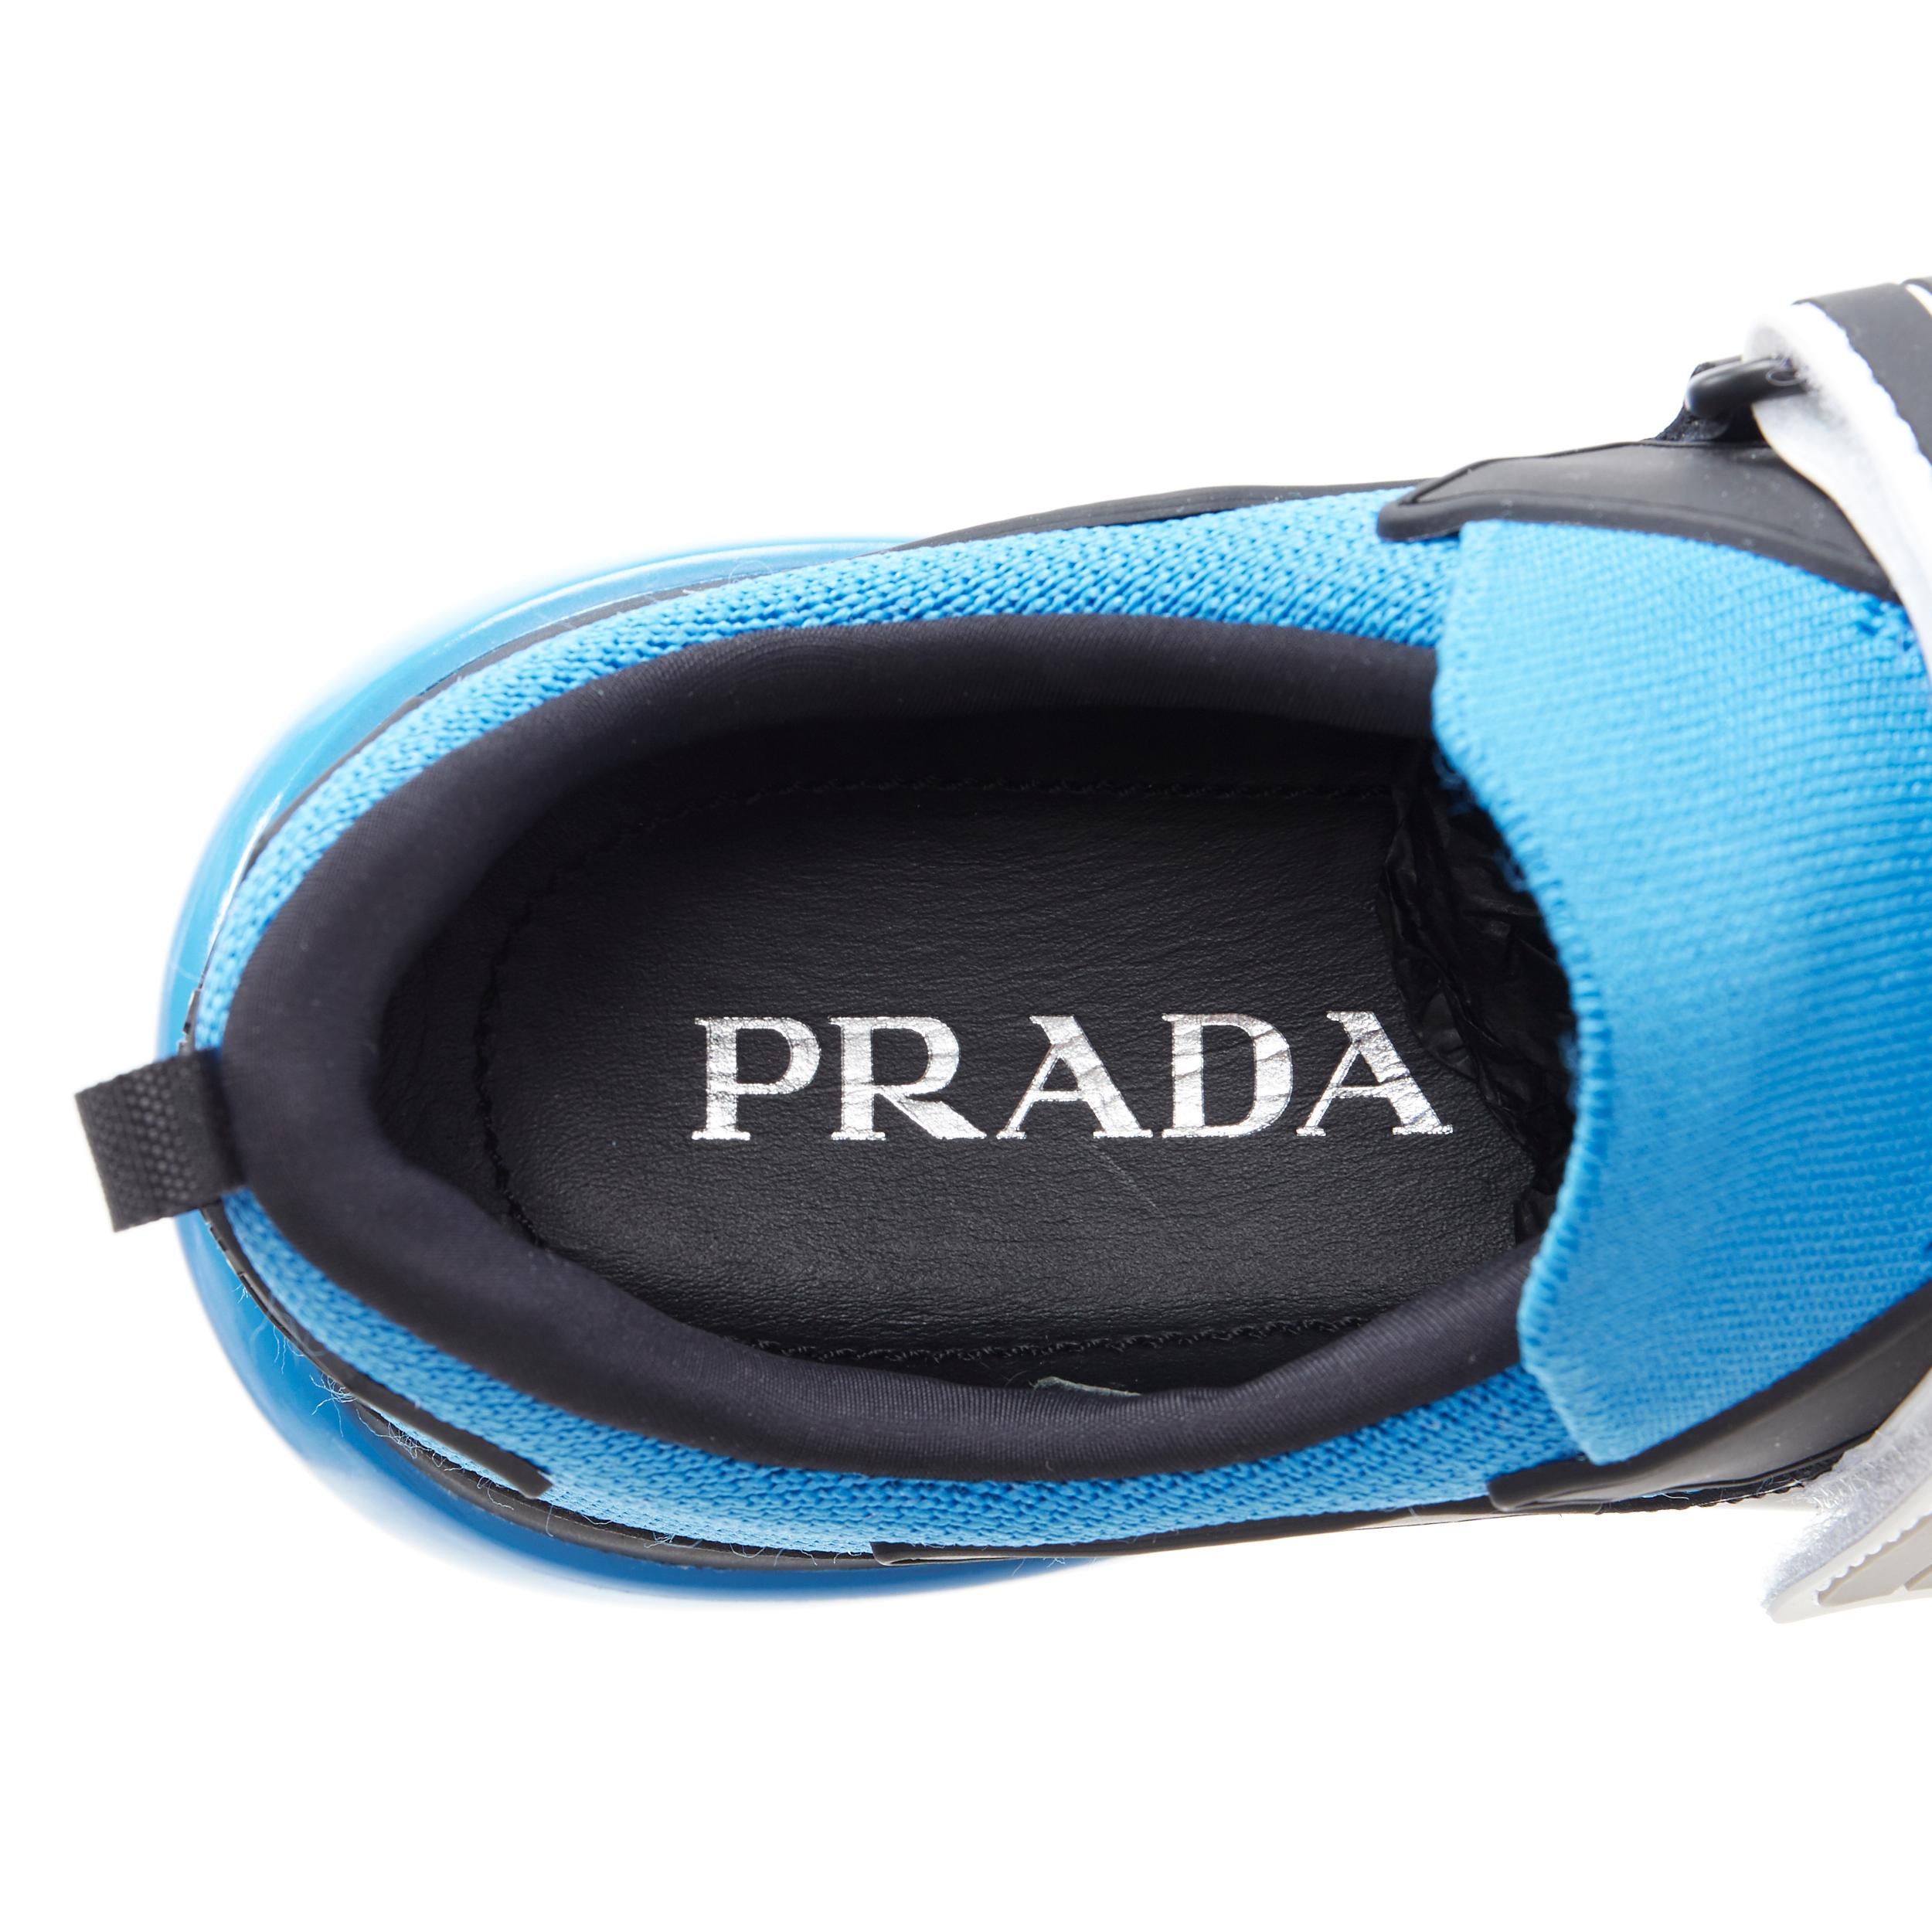 new PRADA 2019 Cloudbust black knitted logo rubber strap sneaker UK5.5 EU38.5 5